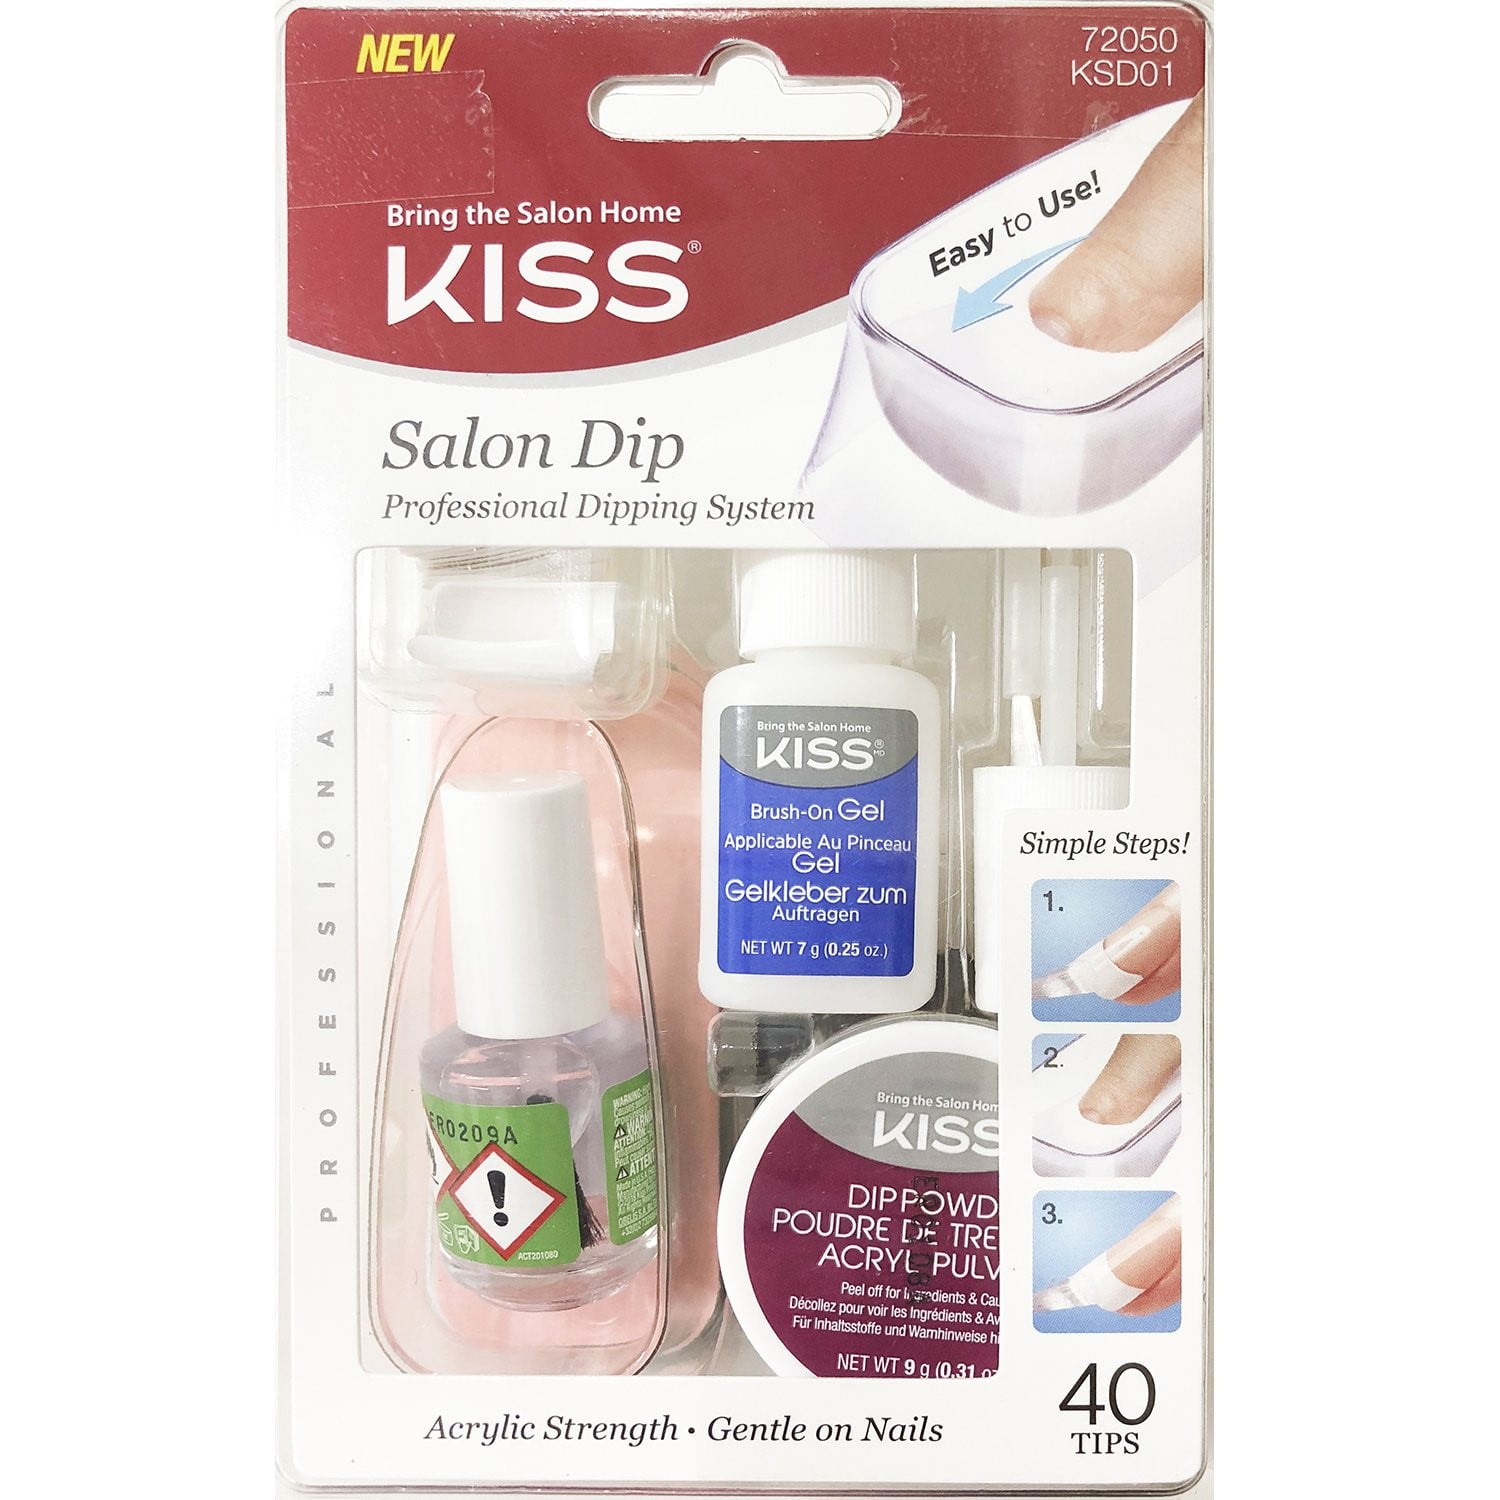 KISS Salon Dip Professional Dipping System